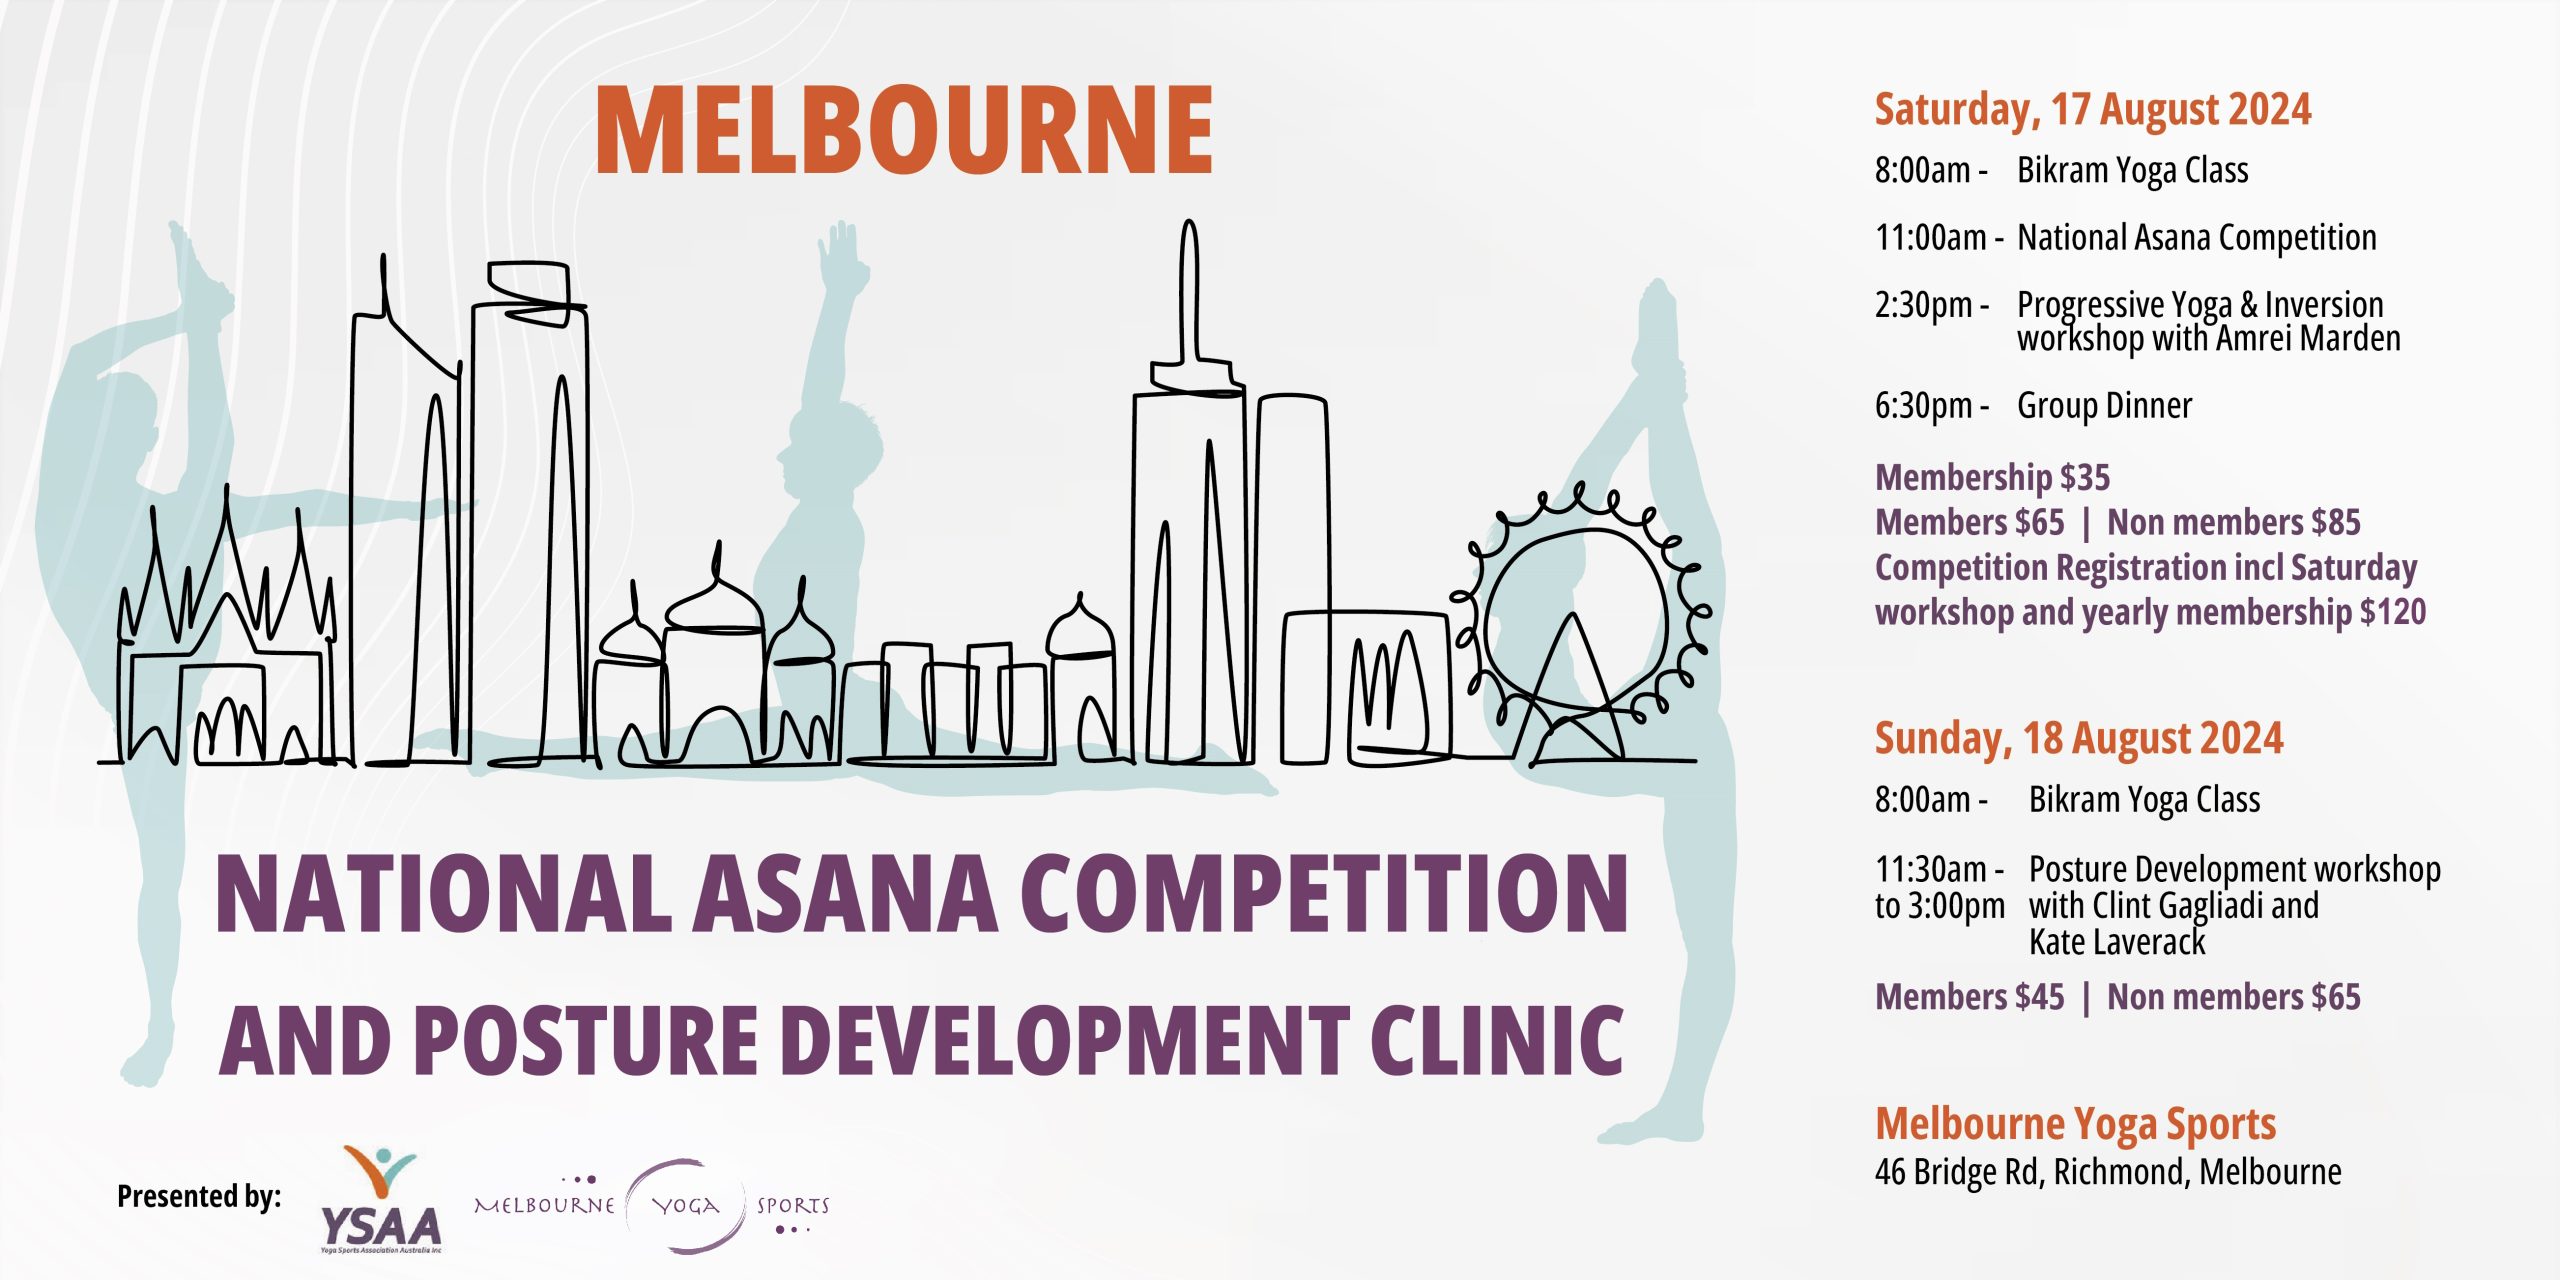 Yoga Asana 2024 and 2 day work shop Melbourne Yoga Sports